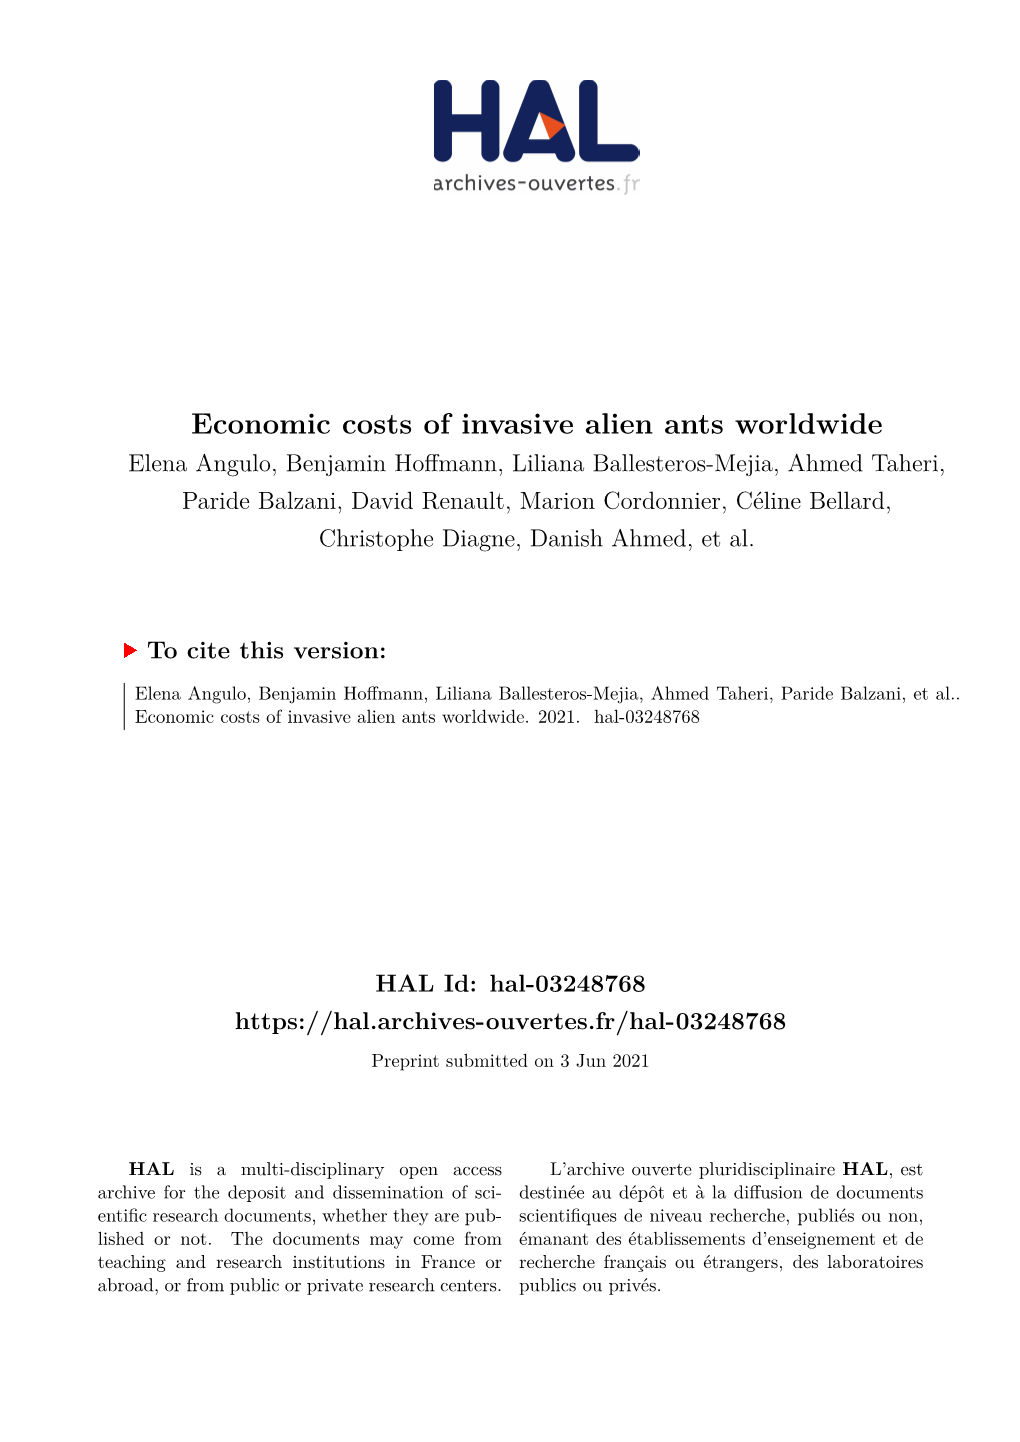 Economic Costs of Invasive Alien Ants Worldwide